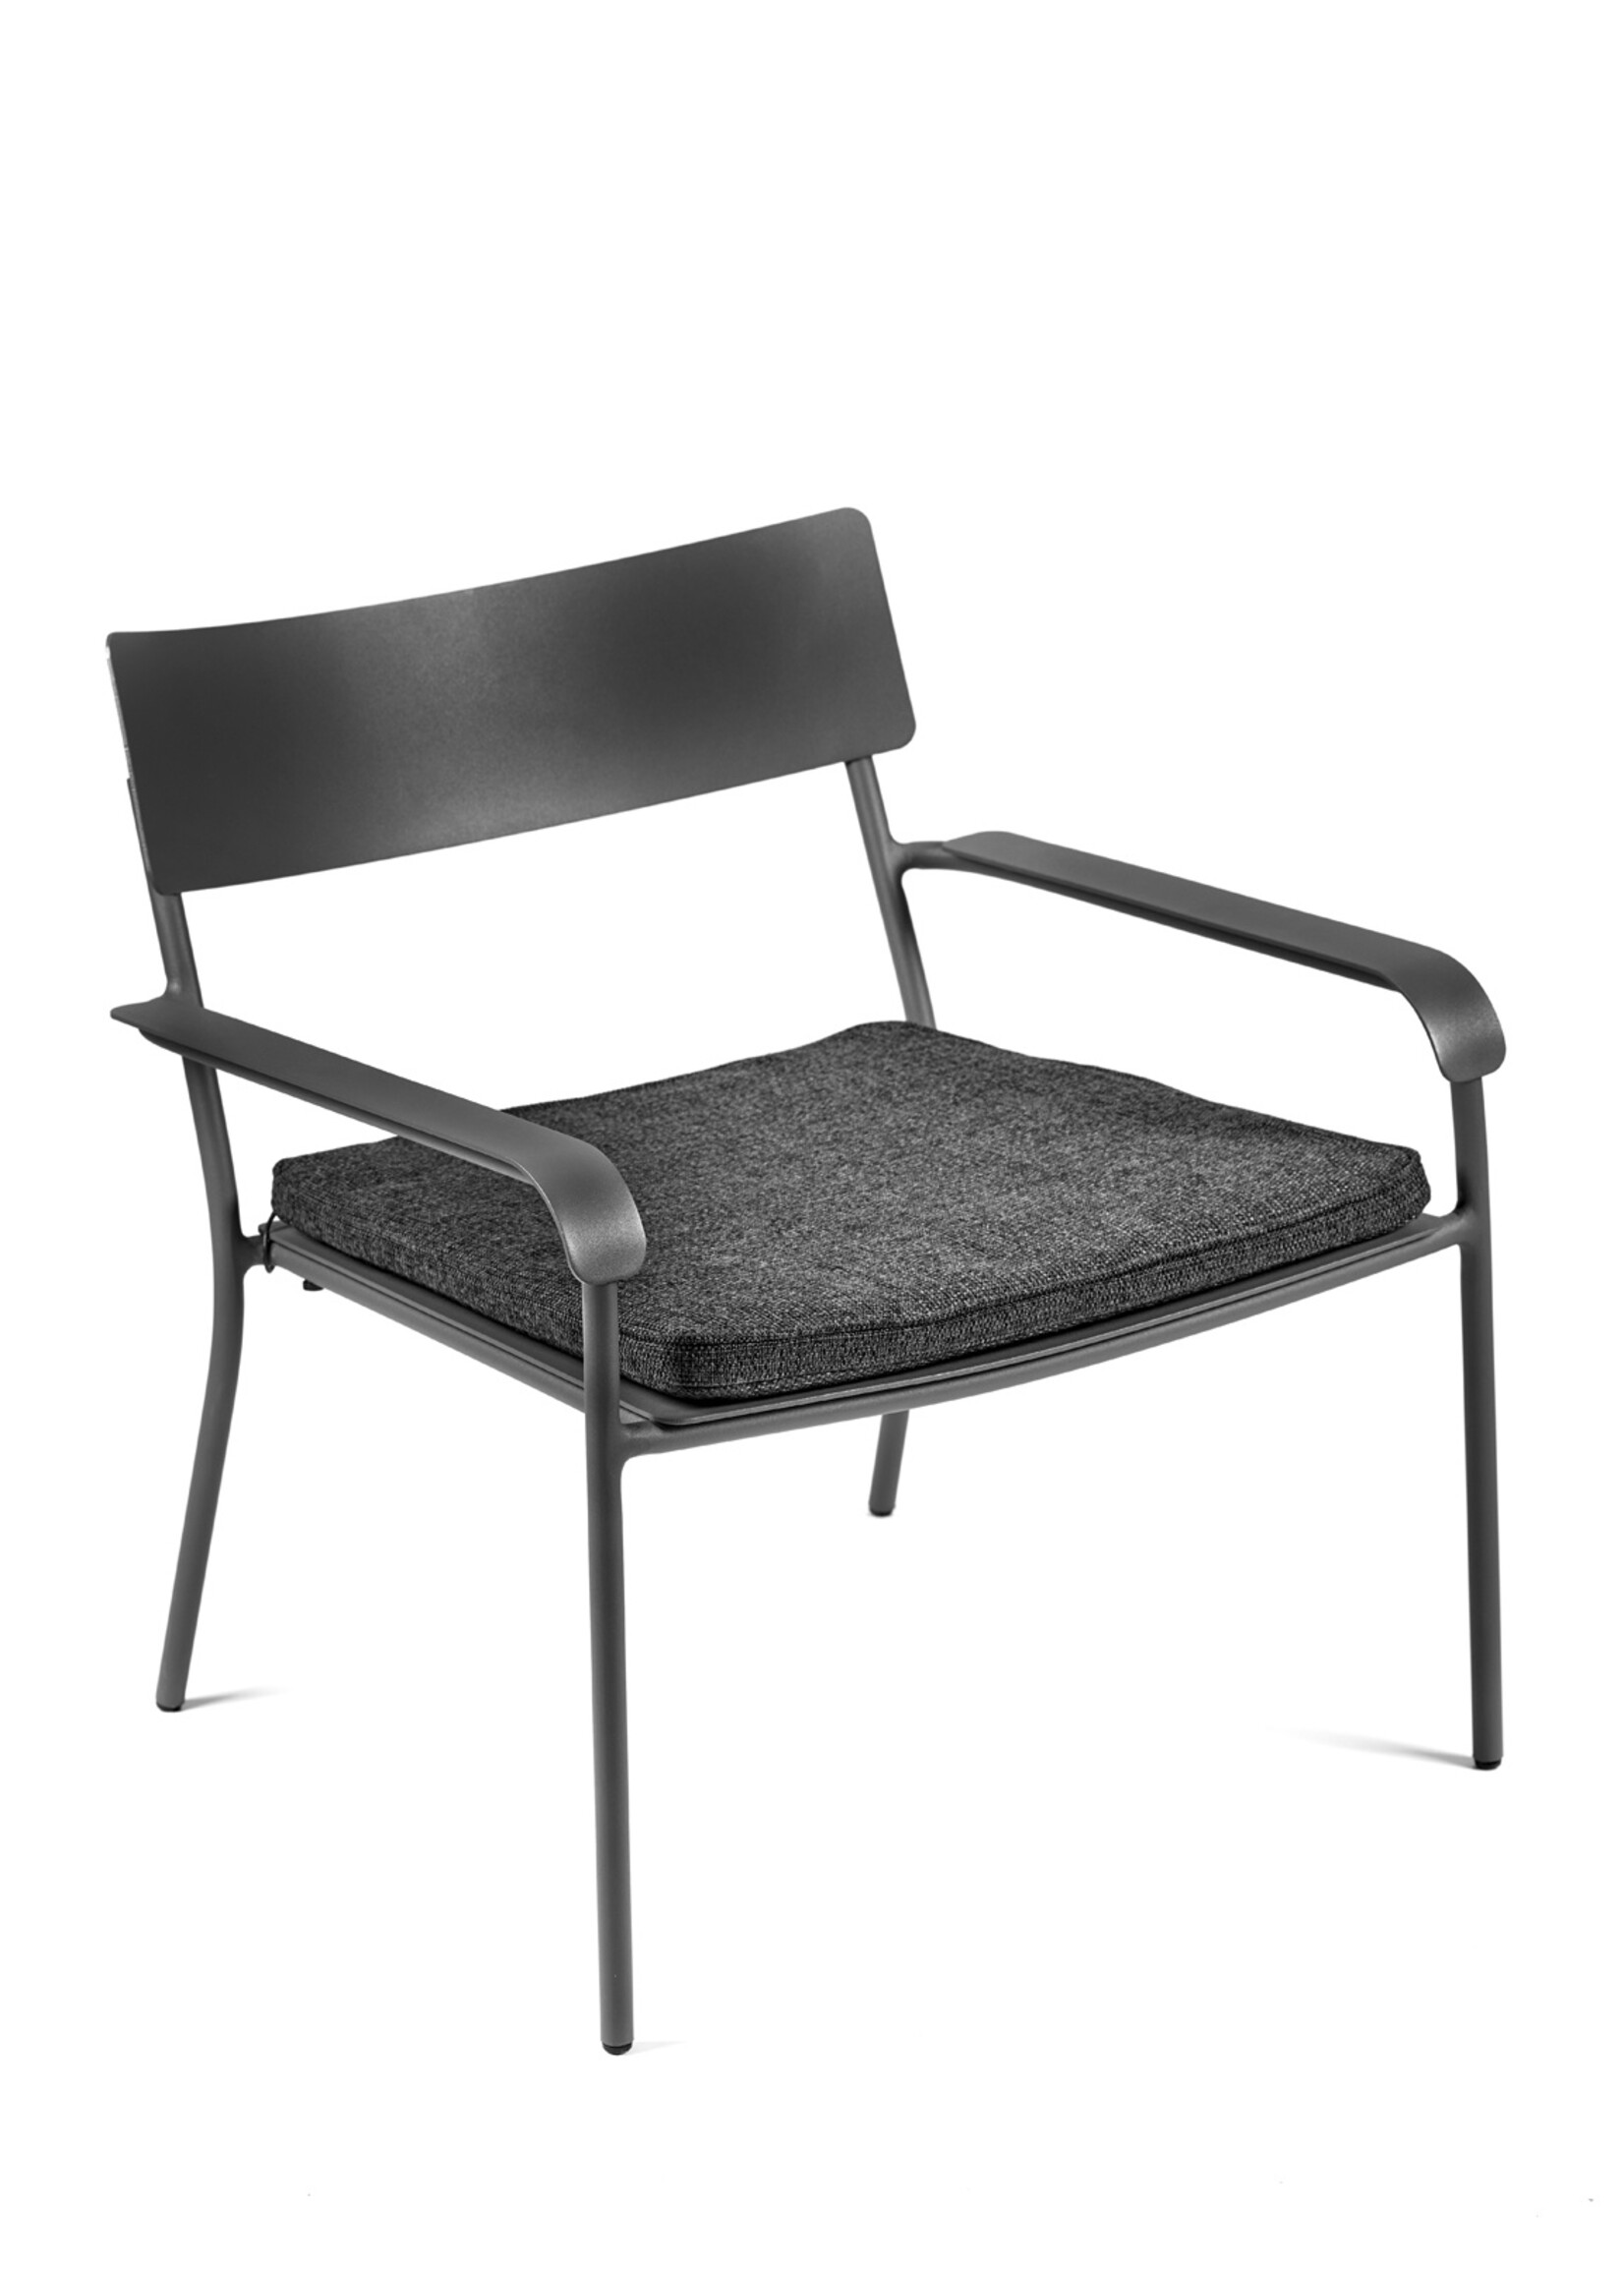 Serax August - Outdoor - Cushion - Lounge Chair - Eucalyptus Green